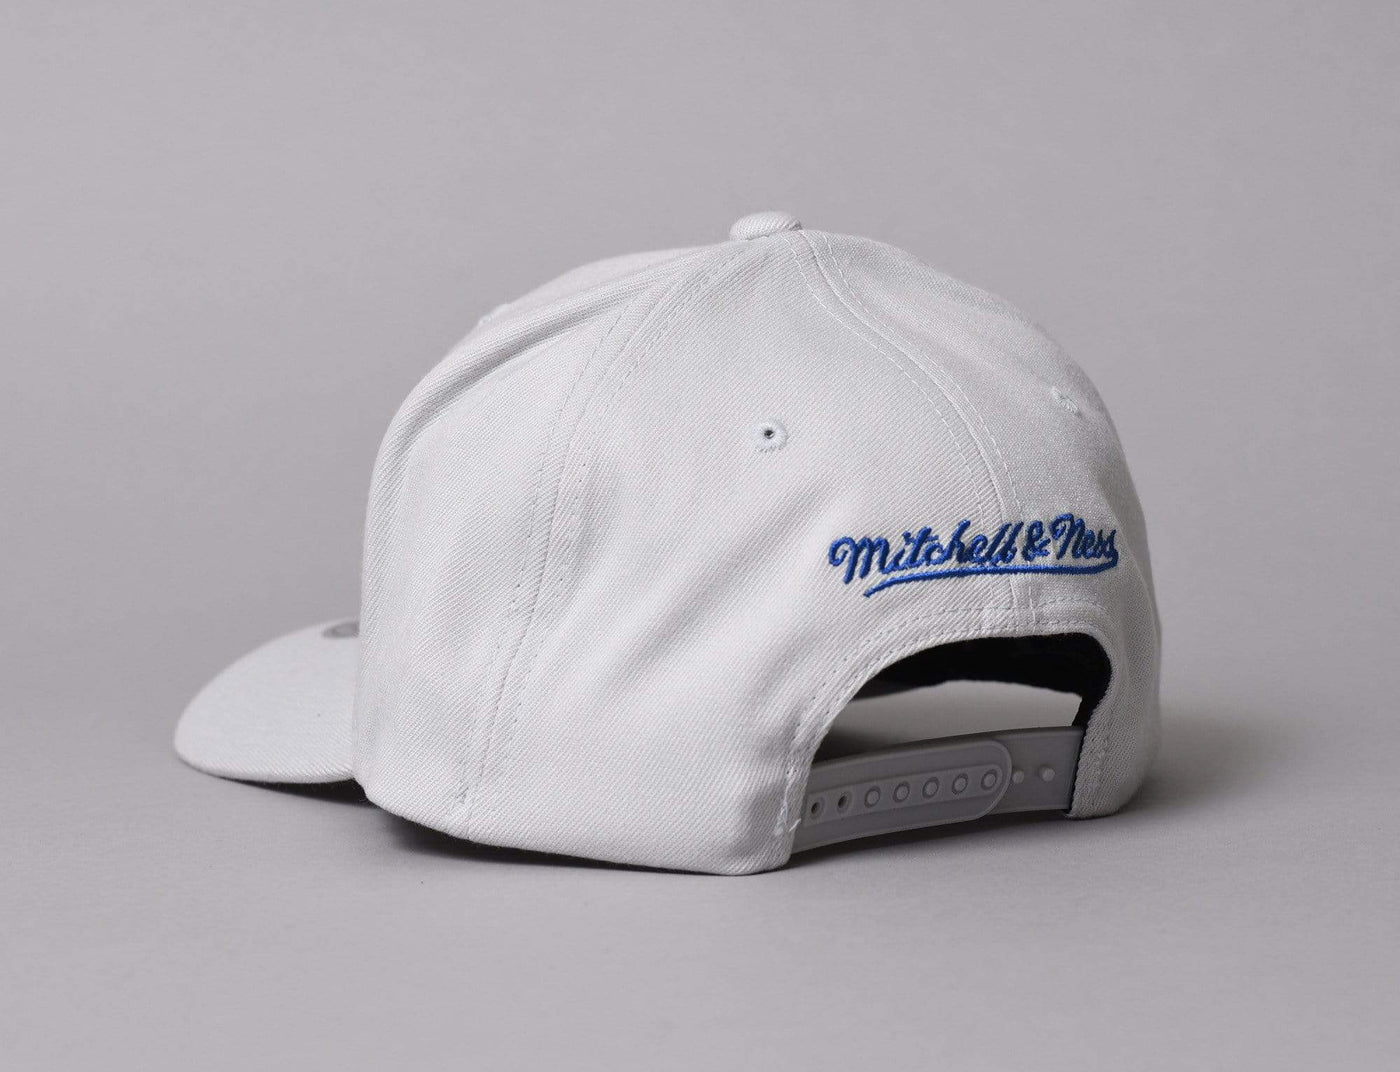 Cap Snapback Team Logo High Crown Flexfit 110 Snapback LA Clippers Mitchell & Ness Snapback Cap / Grey / One Size